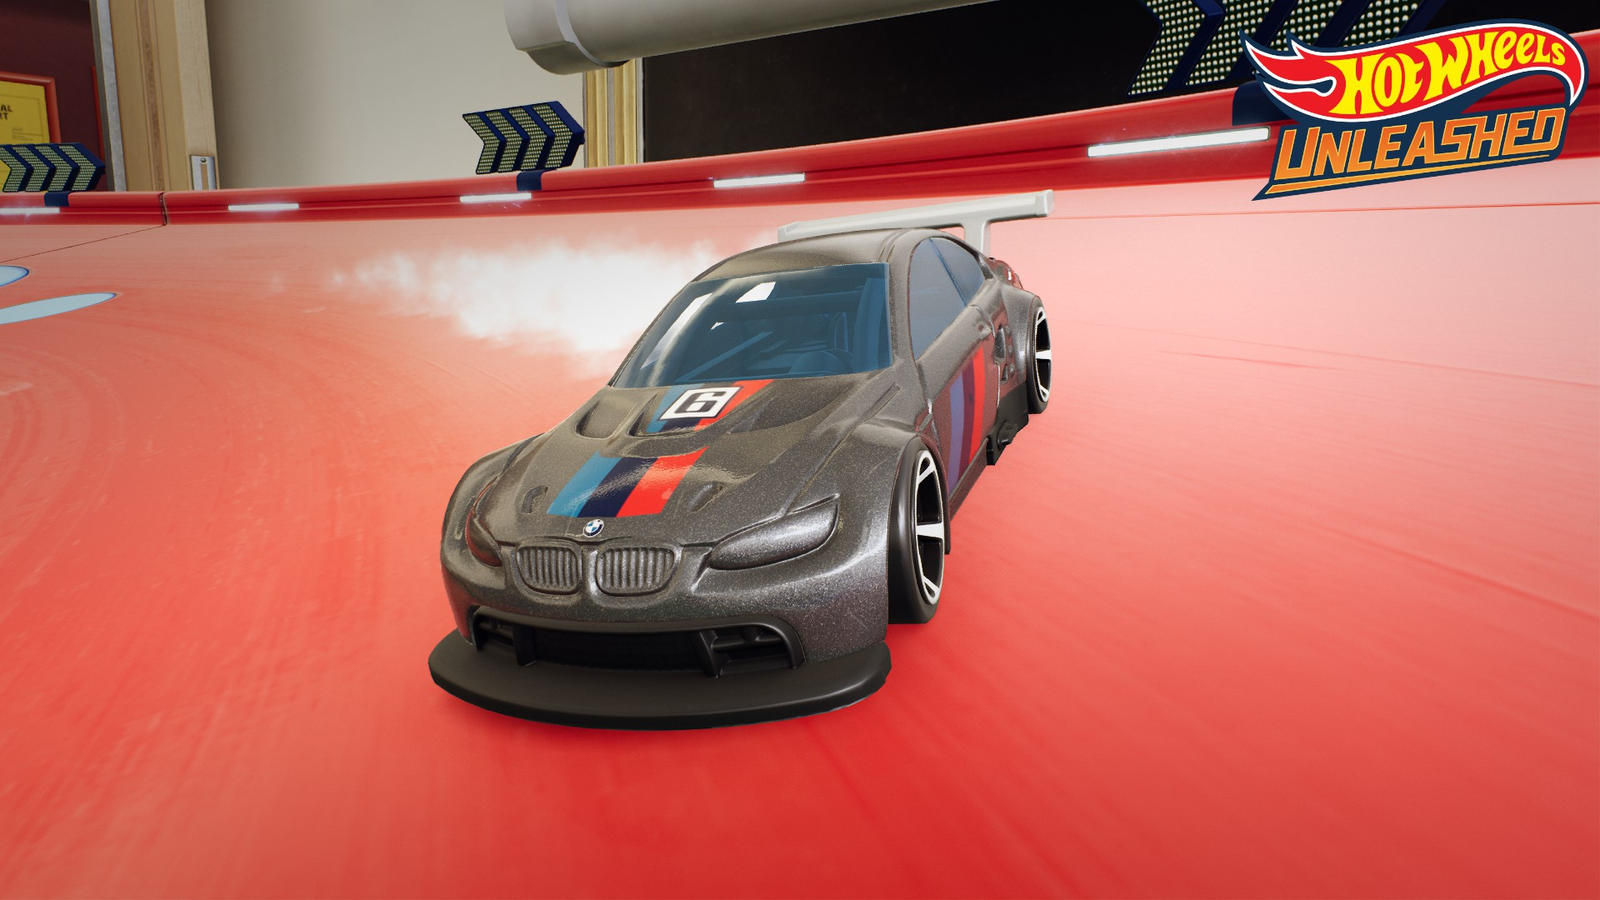 Hot Wheels Unleashed - BMW M3 GT2 by SpeedBumpV-Drop on DeviantArt